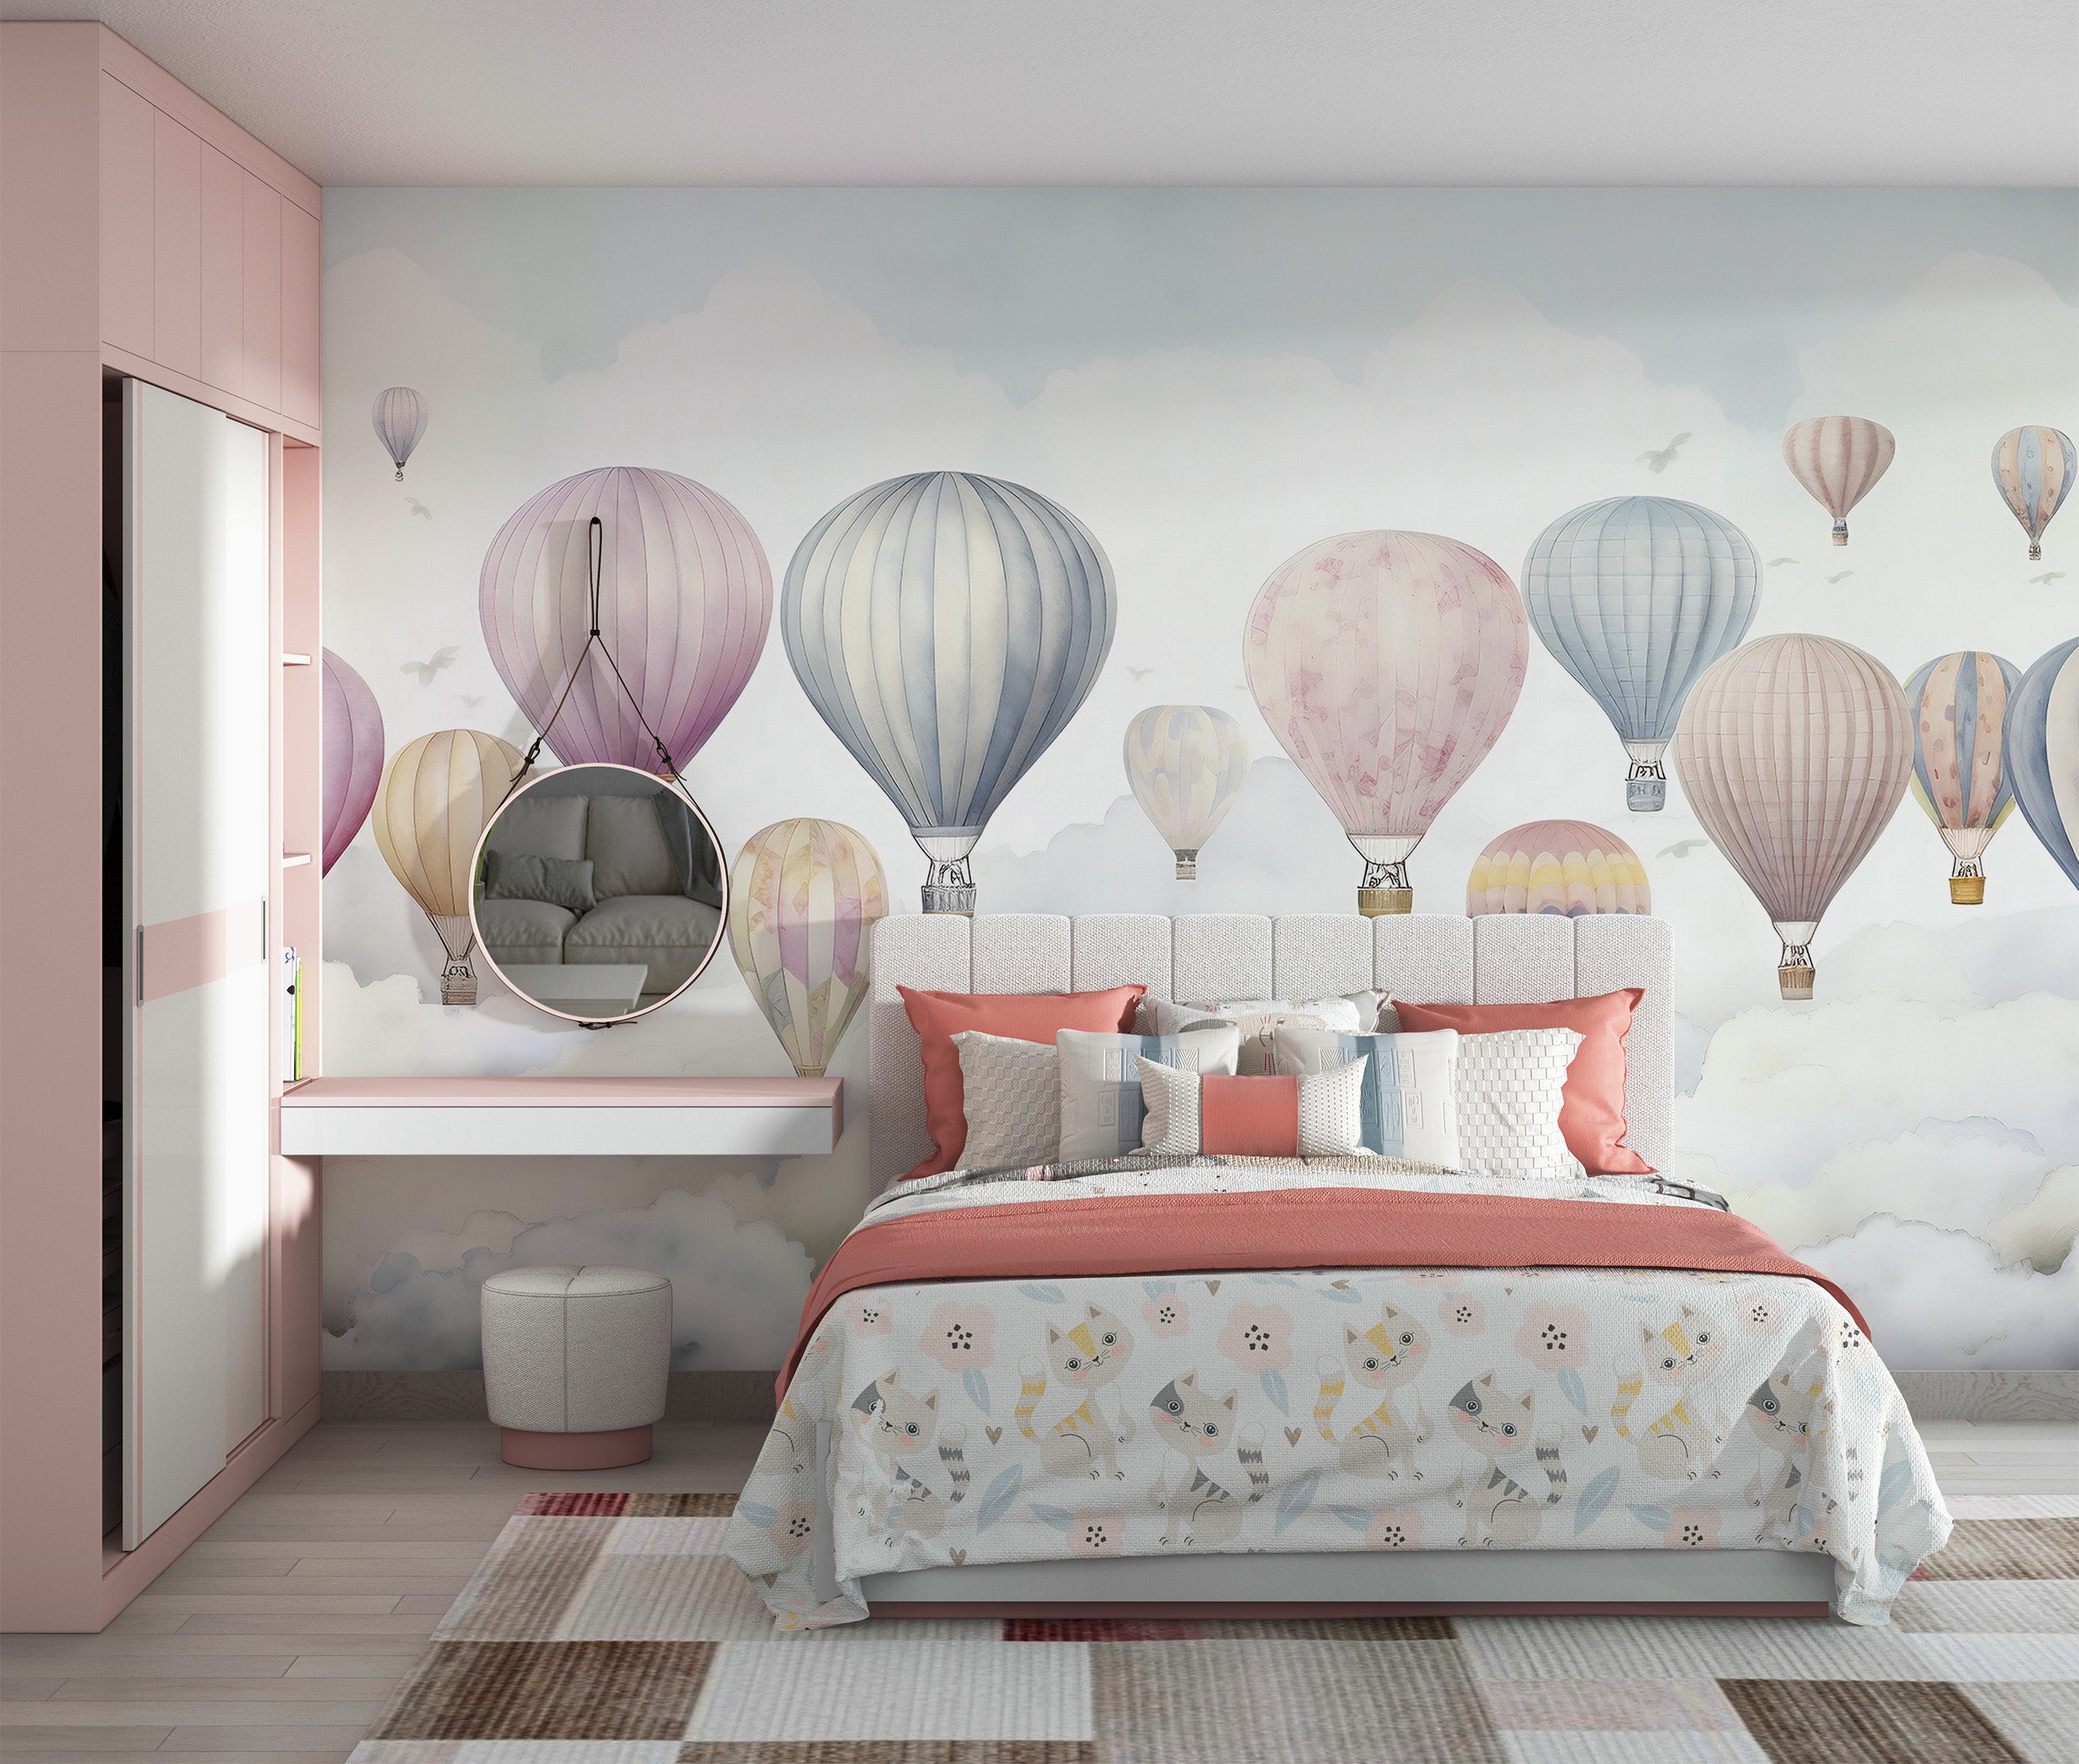 Imaginative Sky and Balloons Wall Art